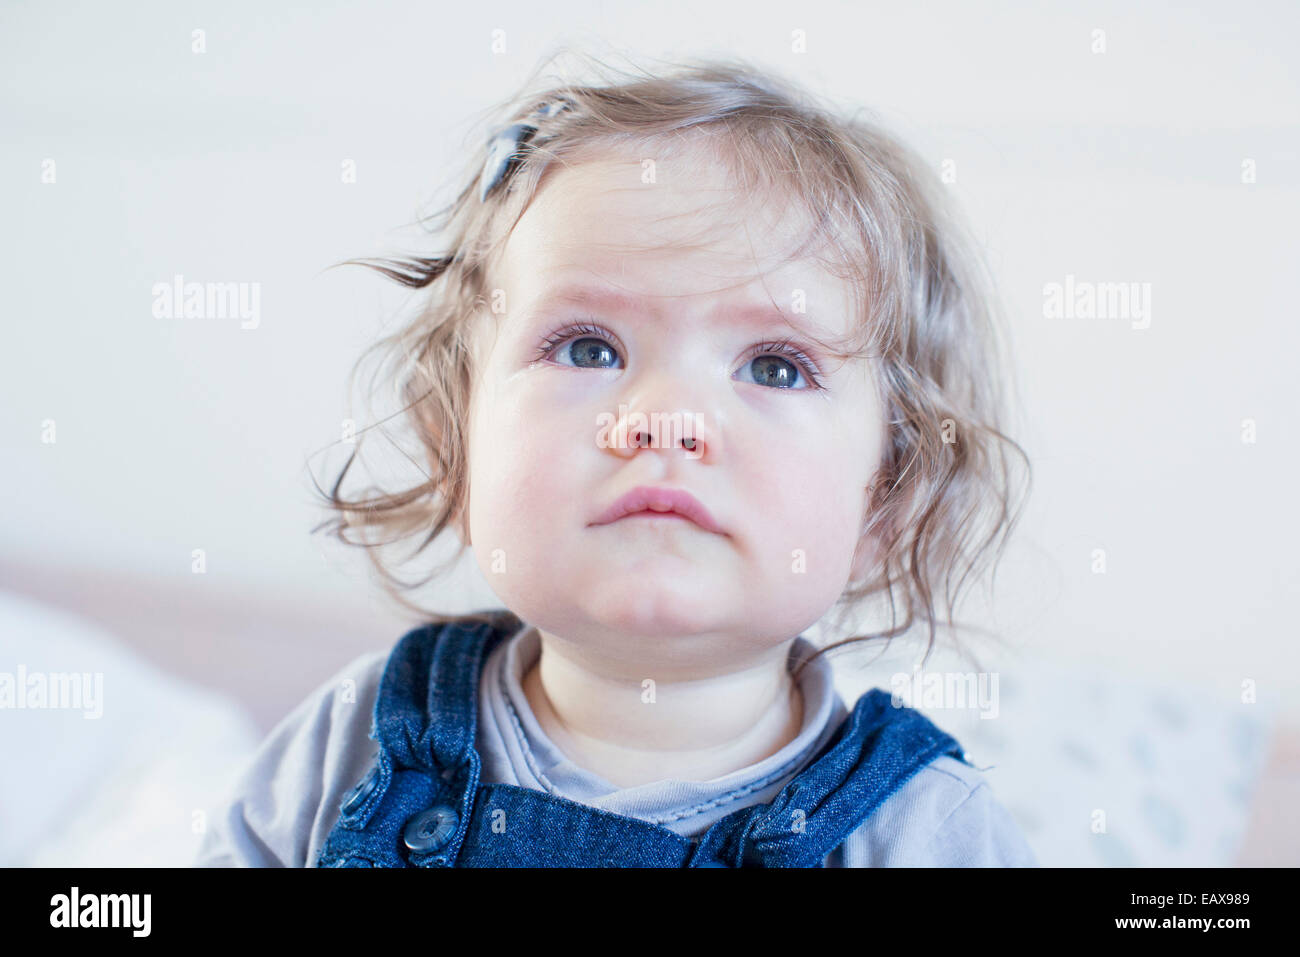 Baby girl looking up, portrait Stock Photo